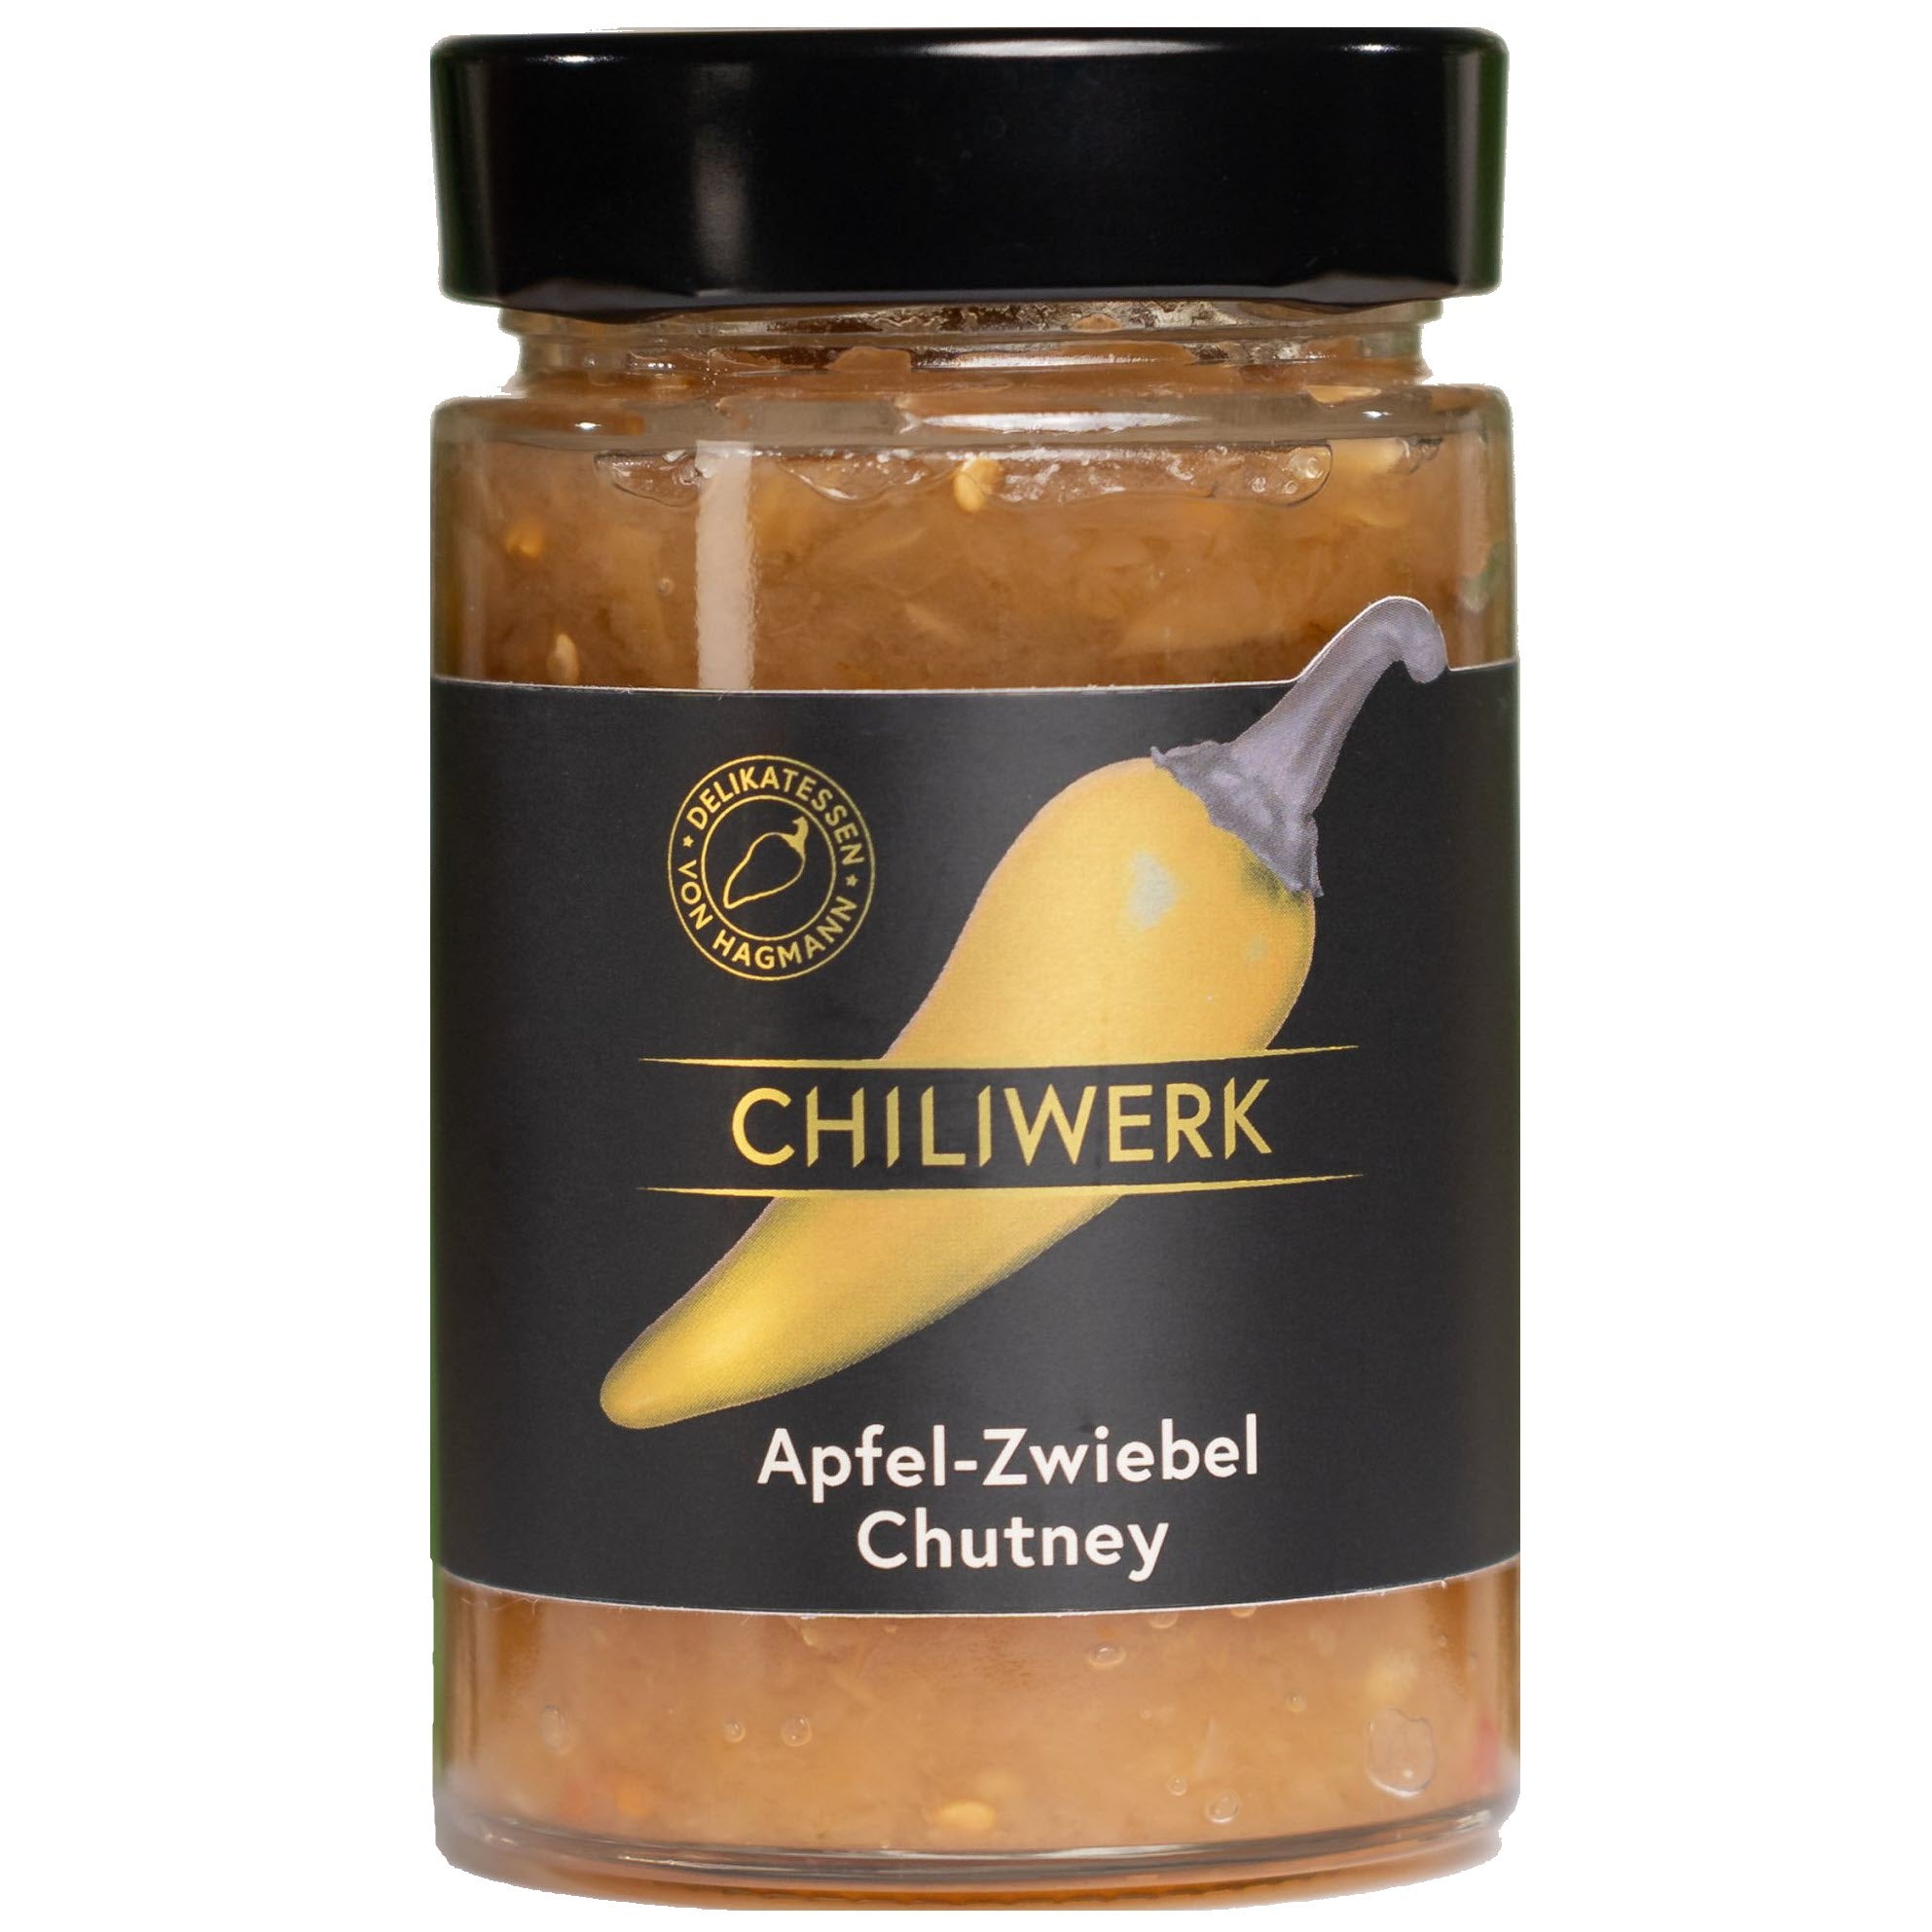 Image of Apfel-Zwiebel Chutney - 130g